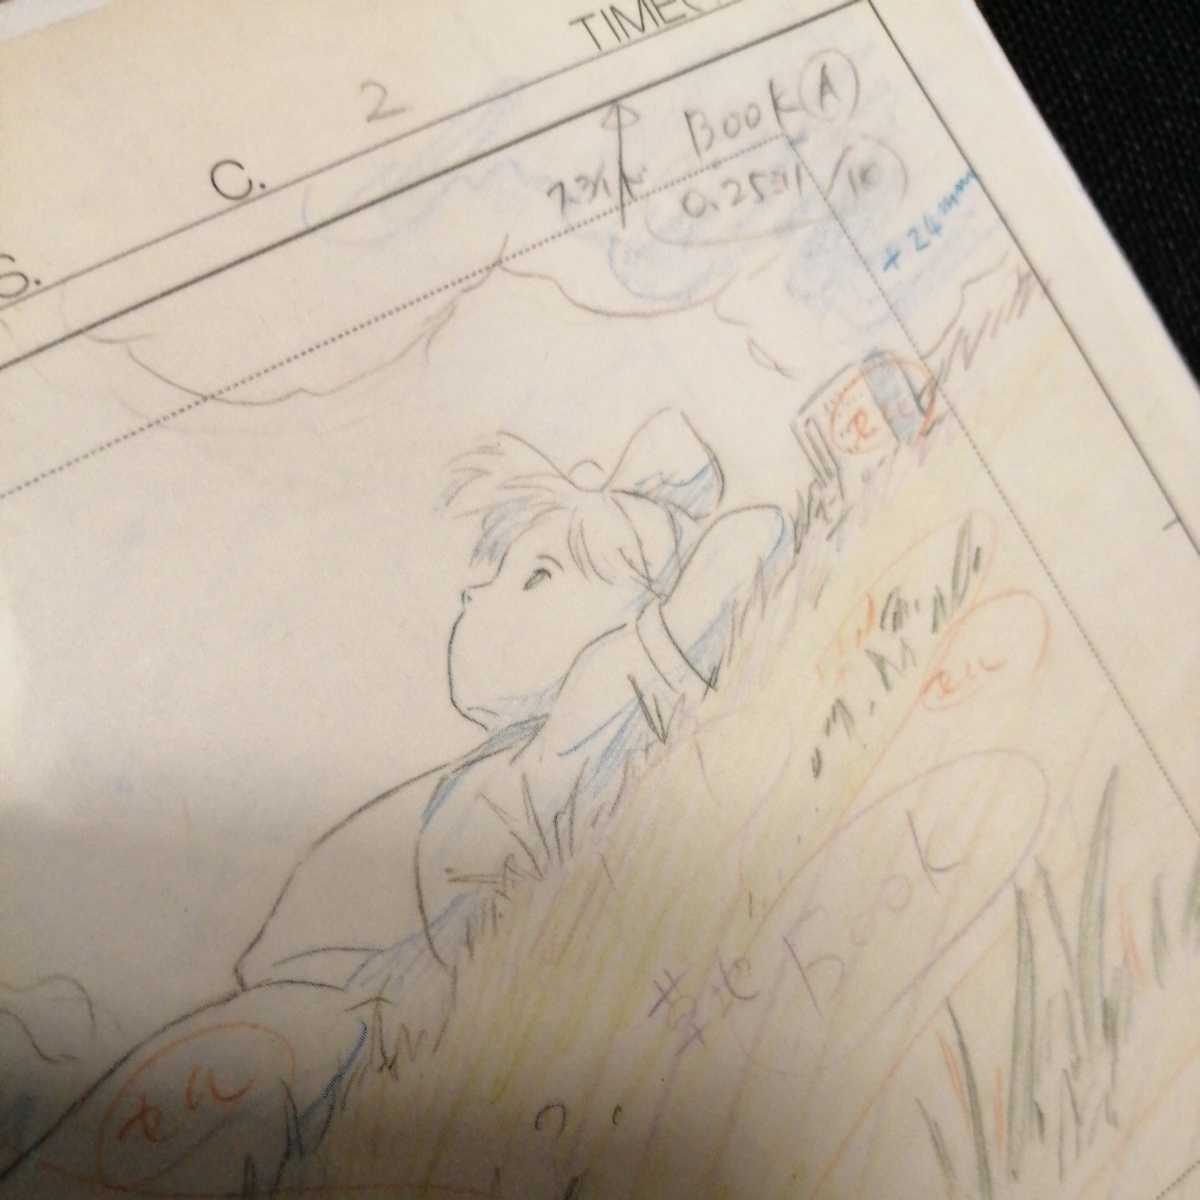  Studio Ghibli Majo no Takkyubin расположение порез . осмотр ) Ghibli открытка постер исходная картина цифровая картинка расположение выставка Miyazaki .